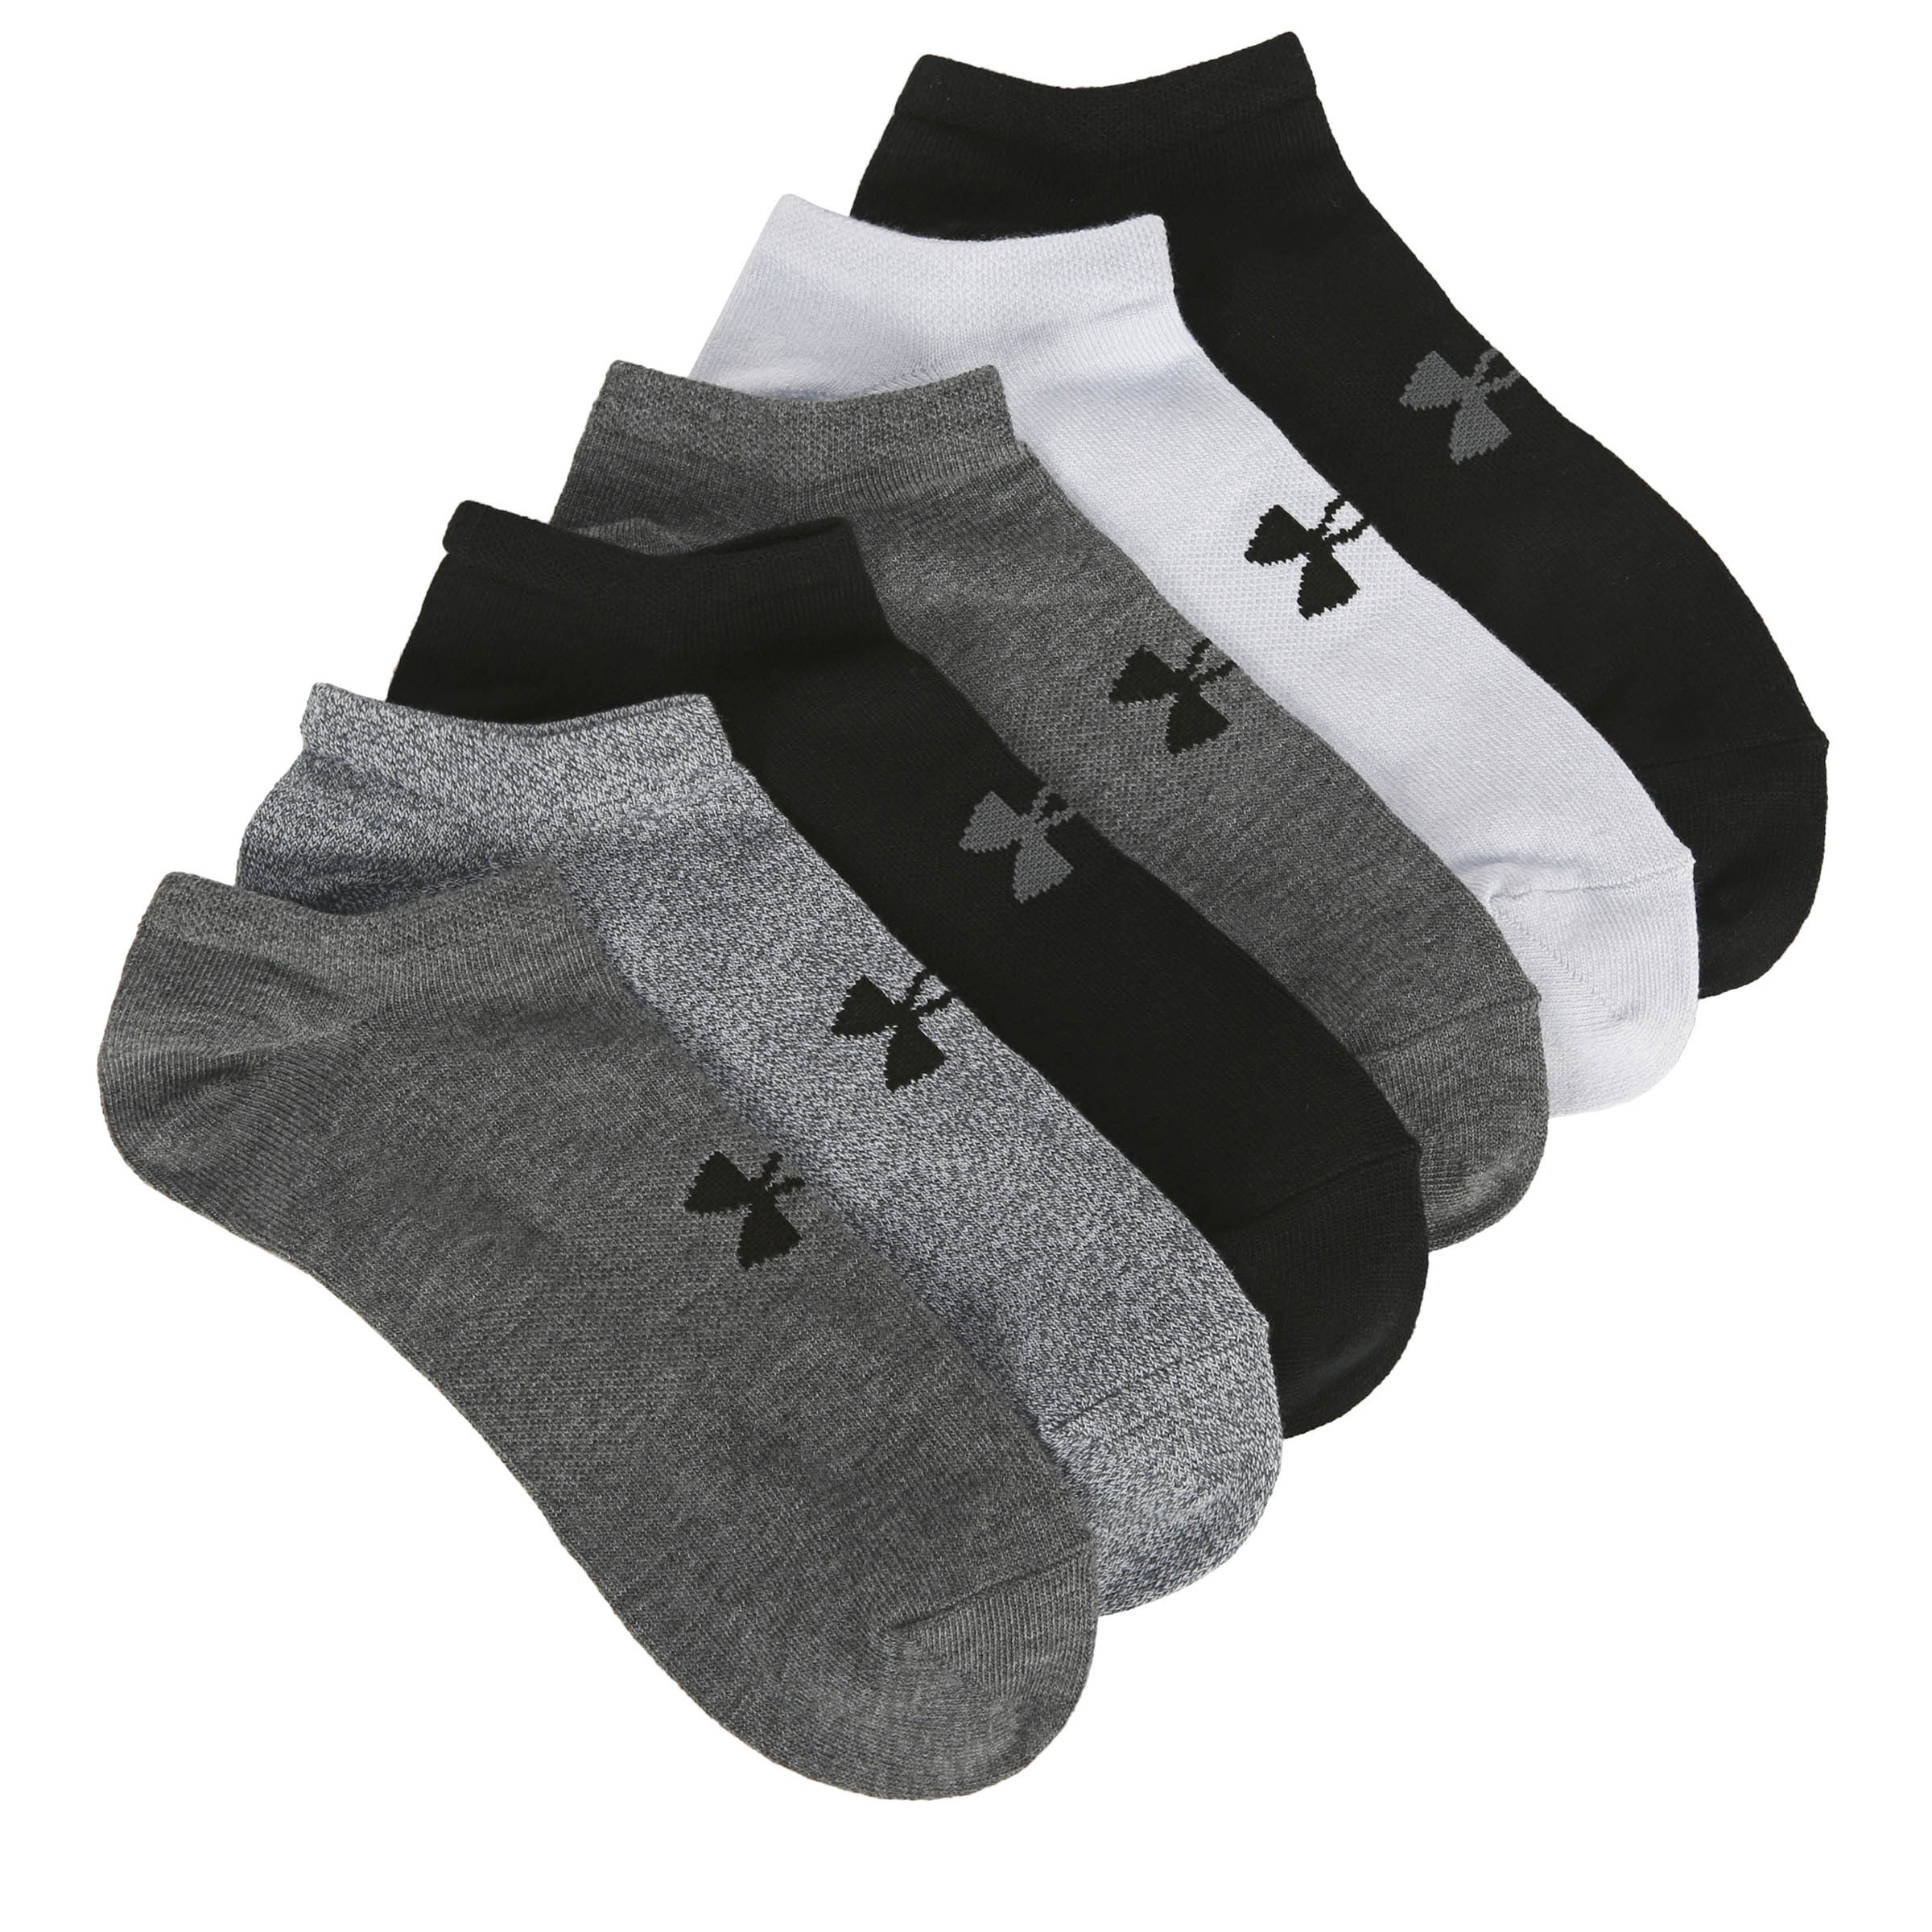 Under Armour unisex-adult Essential Lite No Show Socks 6-pairs Socks